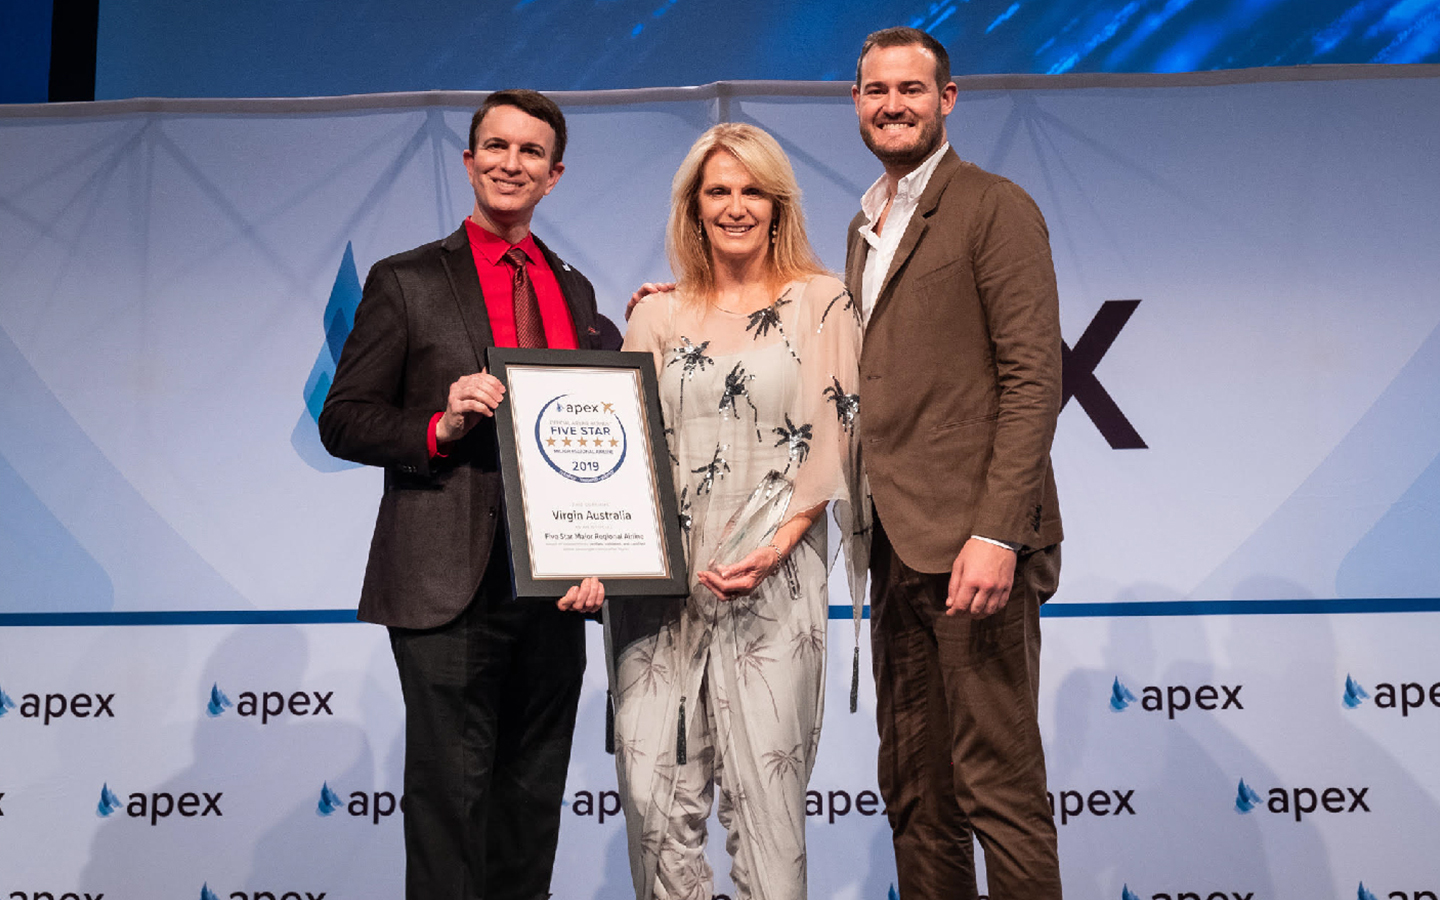 Stellar Entertainment’s Client Virgin Australia Wins at 2018 APEX Awards